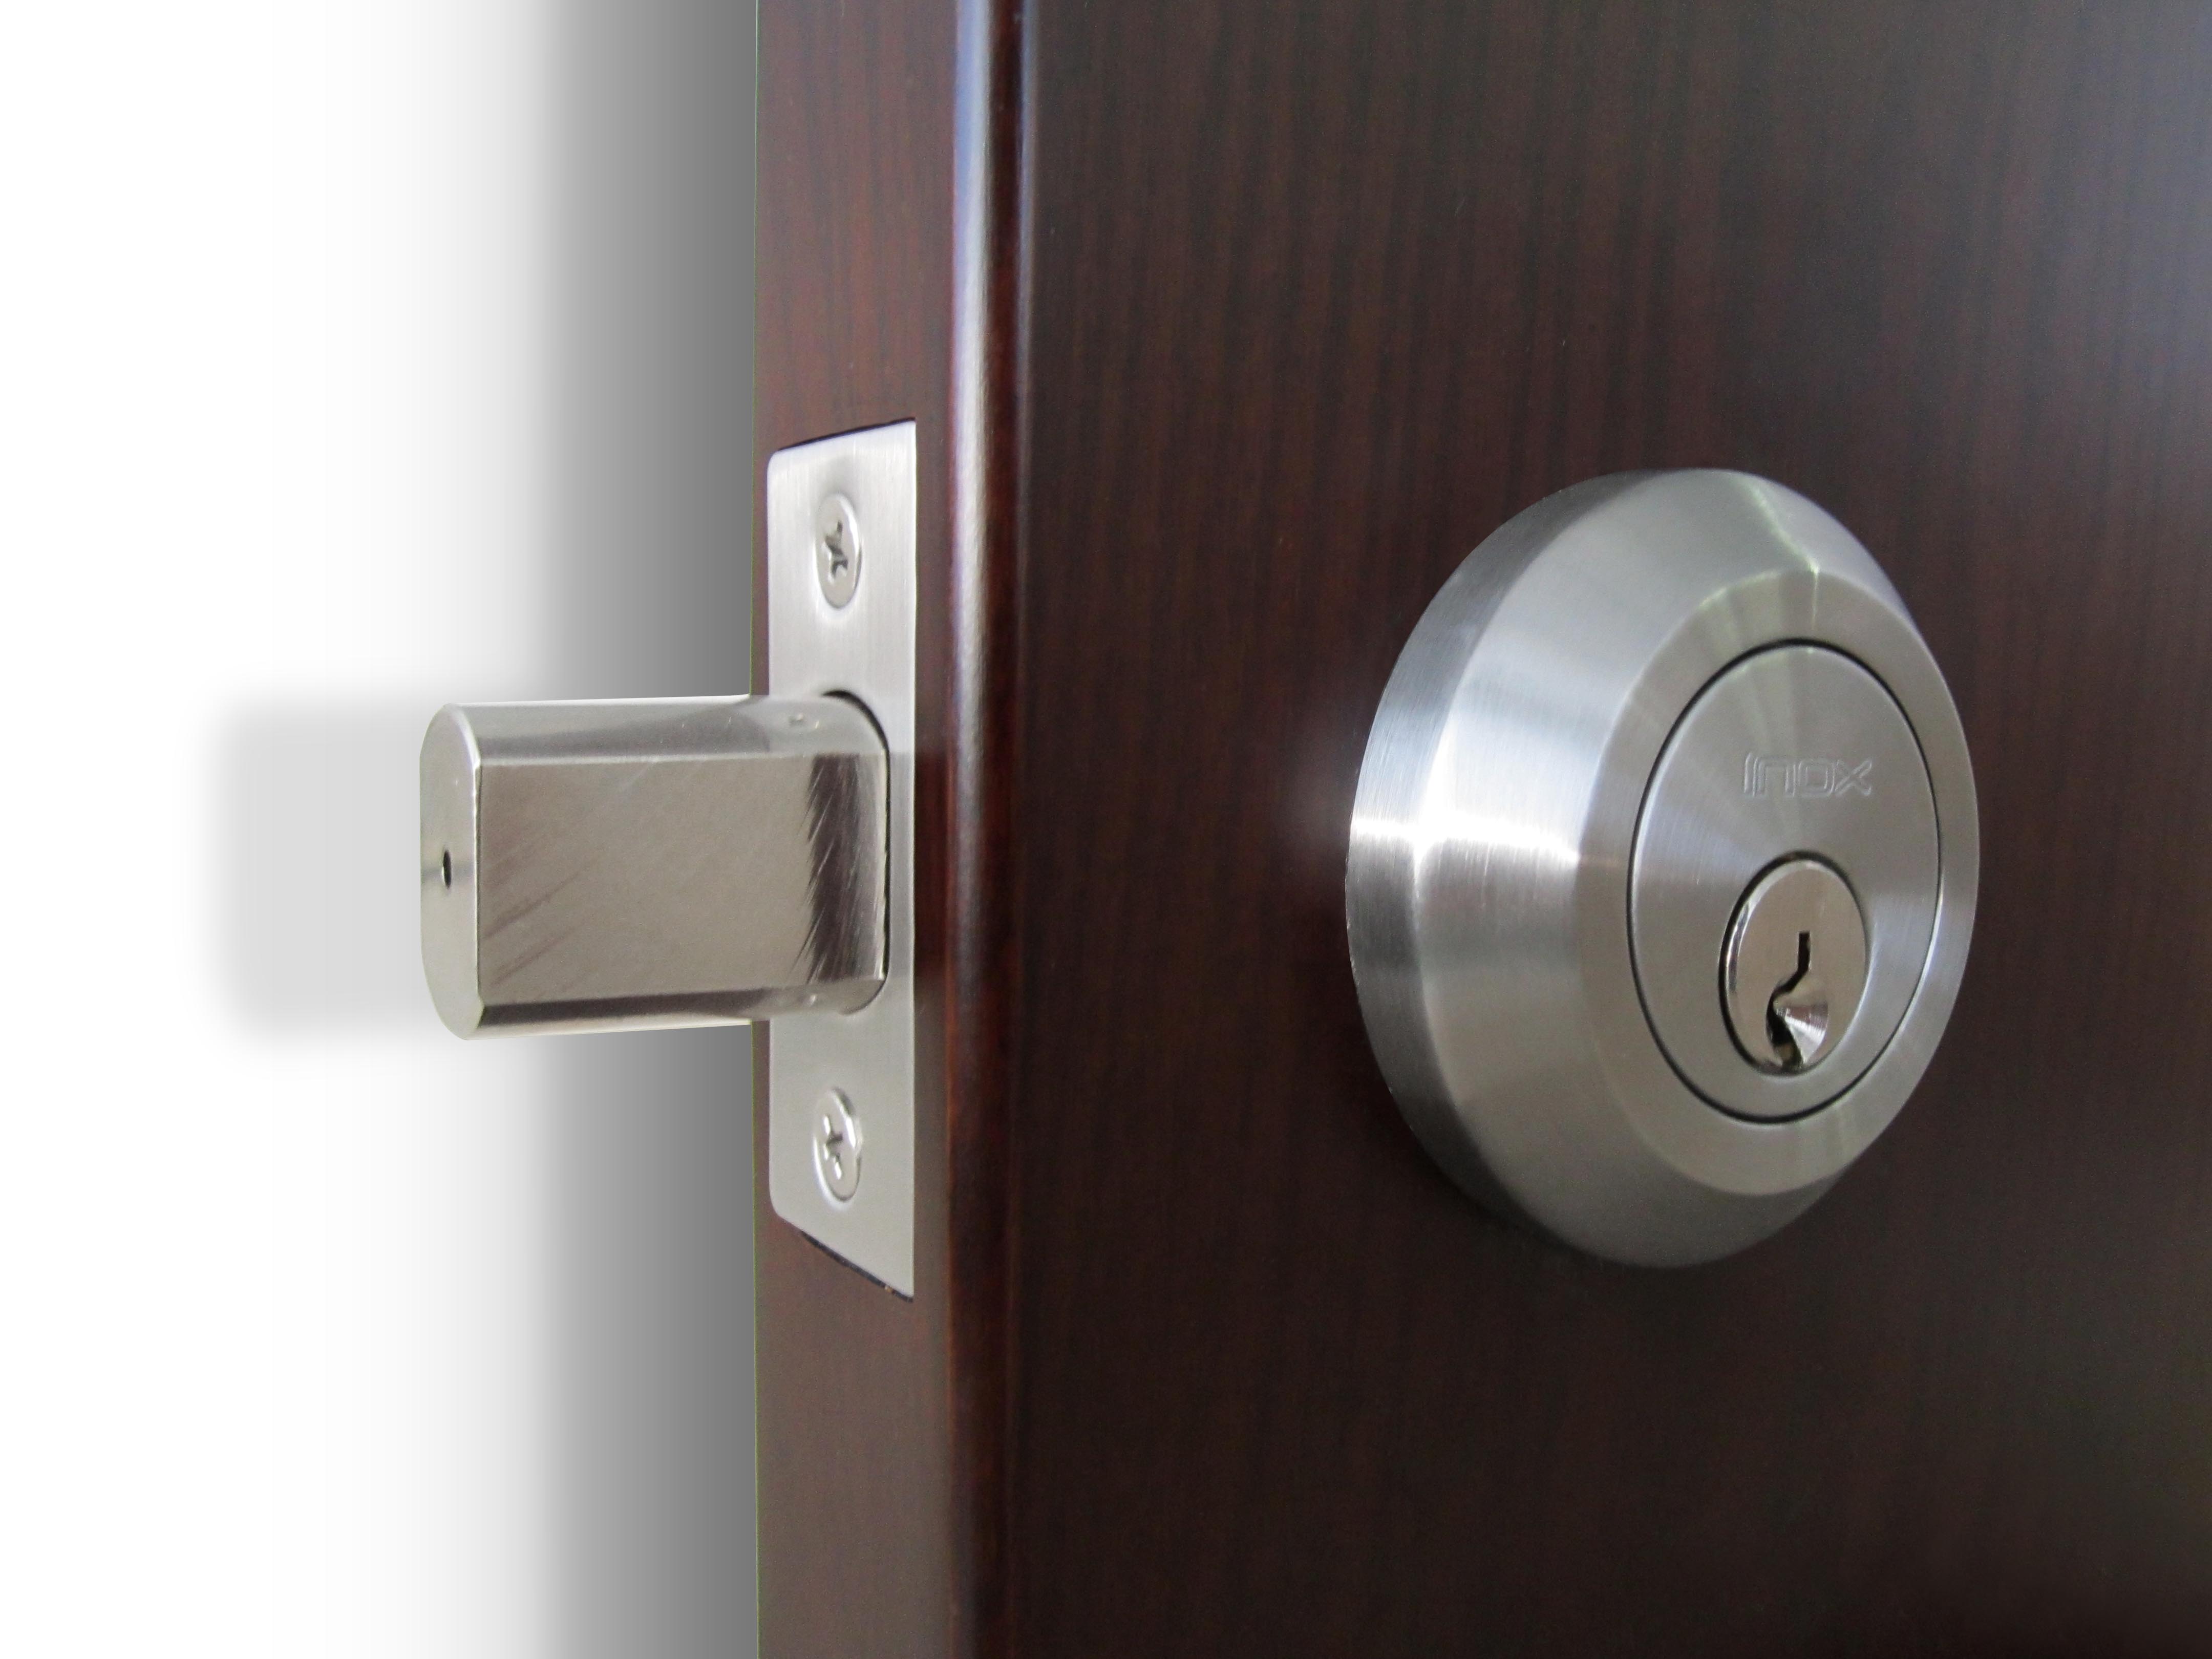 What Makes a Deadbolt Lock Secure?